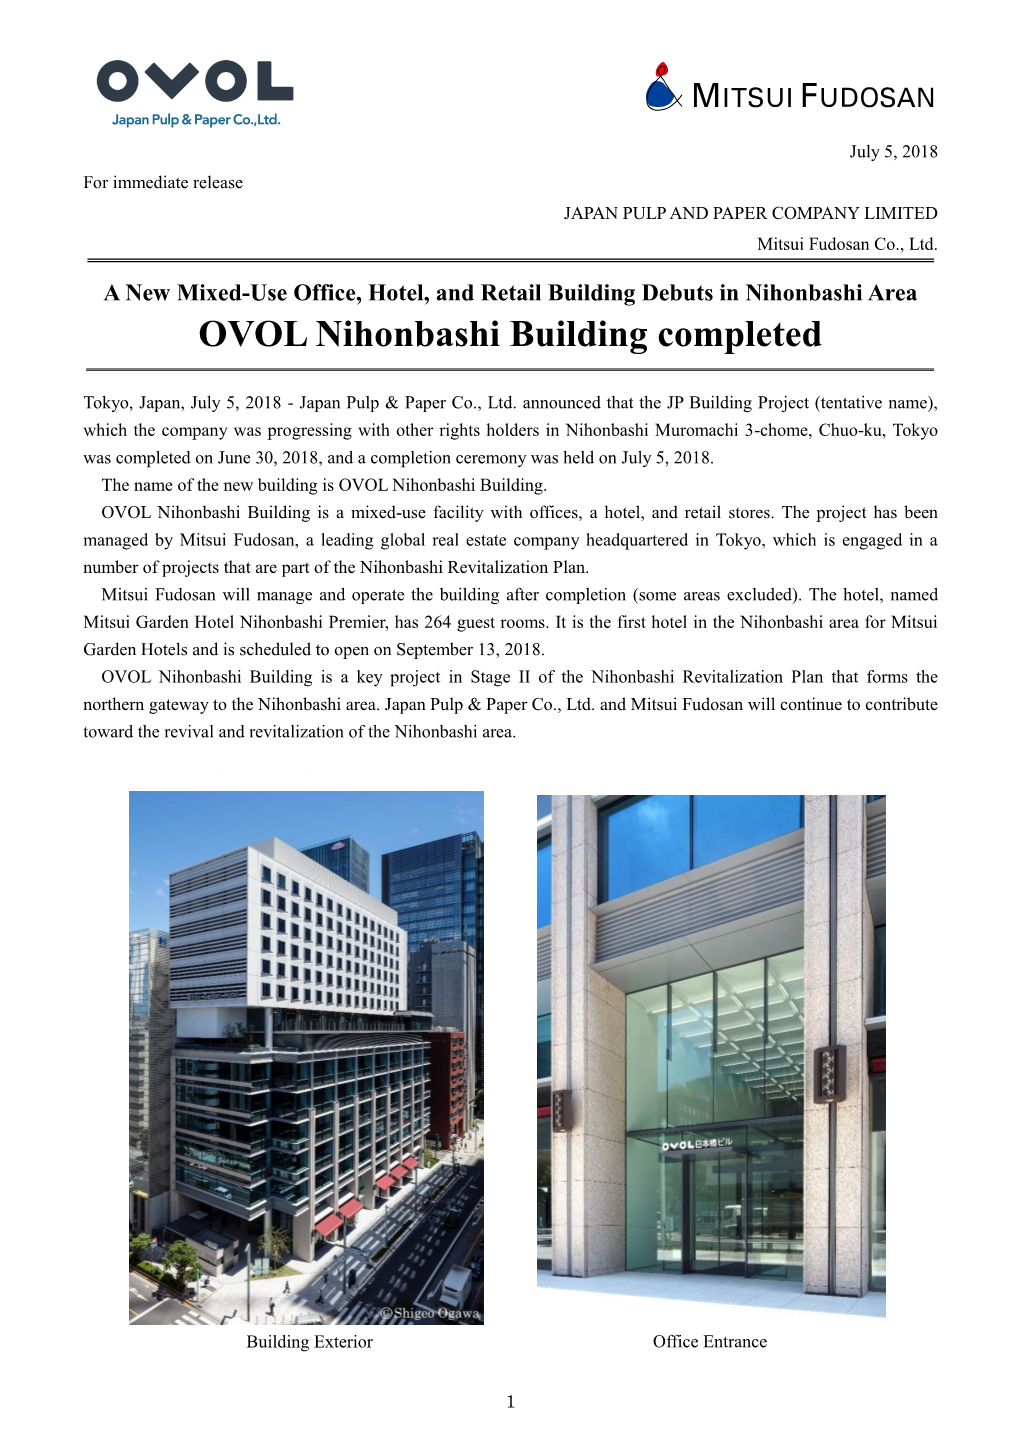 OVOL Nihonbashi Building Completed